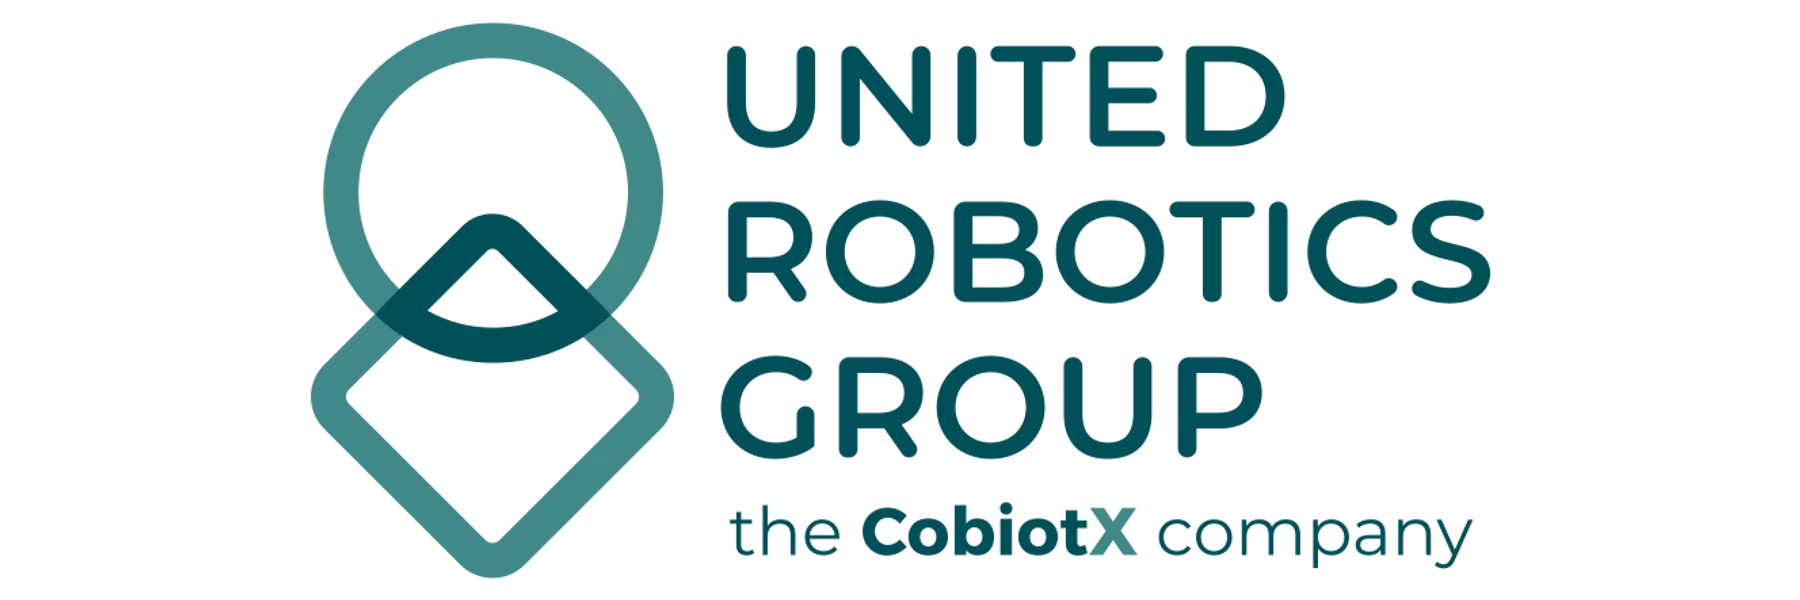 United Robotics Group